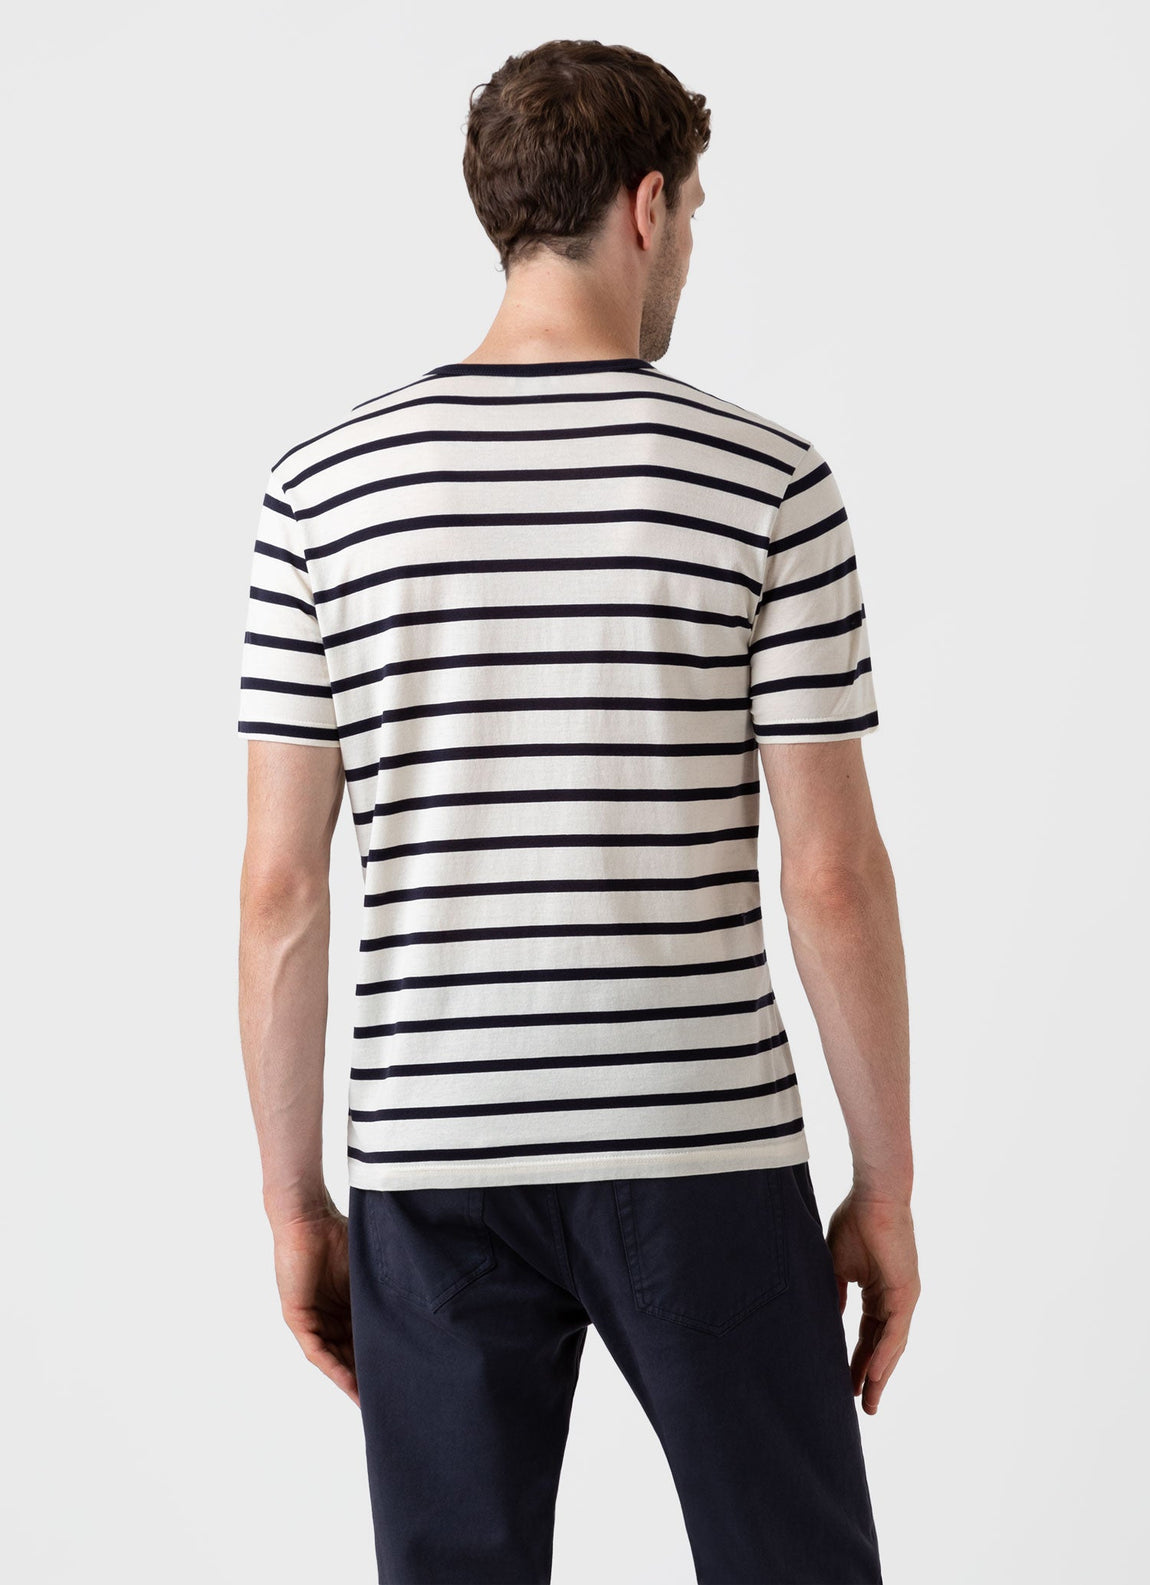 Men's Classic T-shirt in Ecru/Navy Breton Stripe